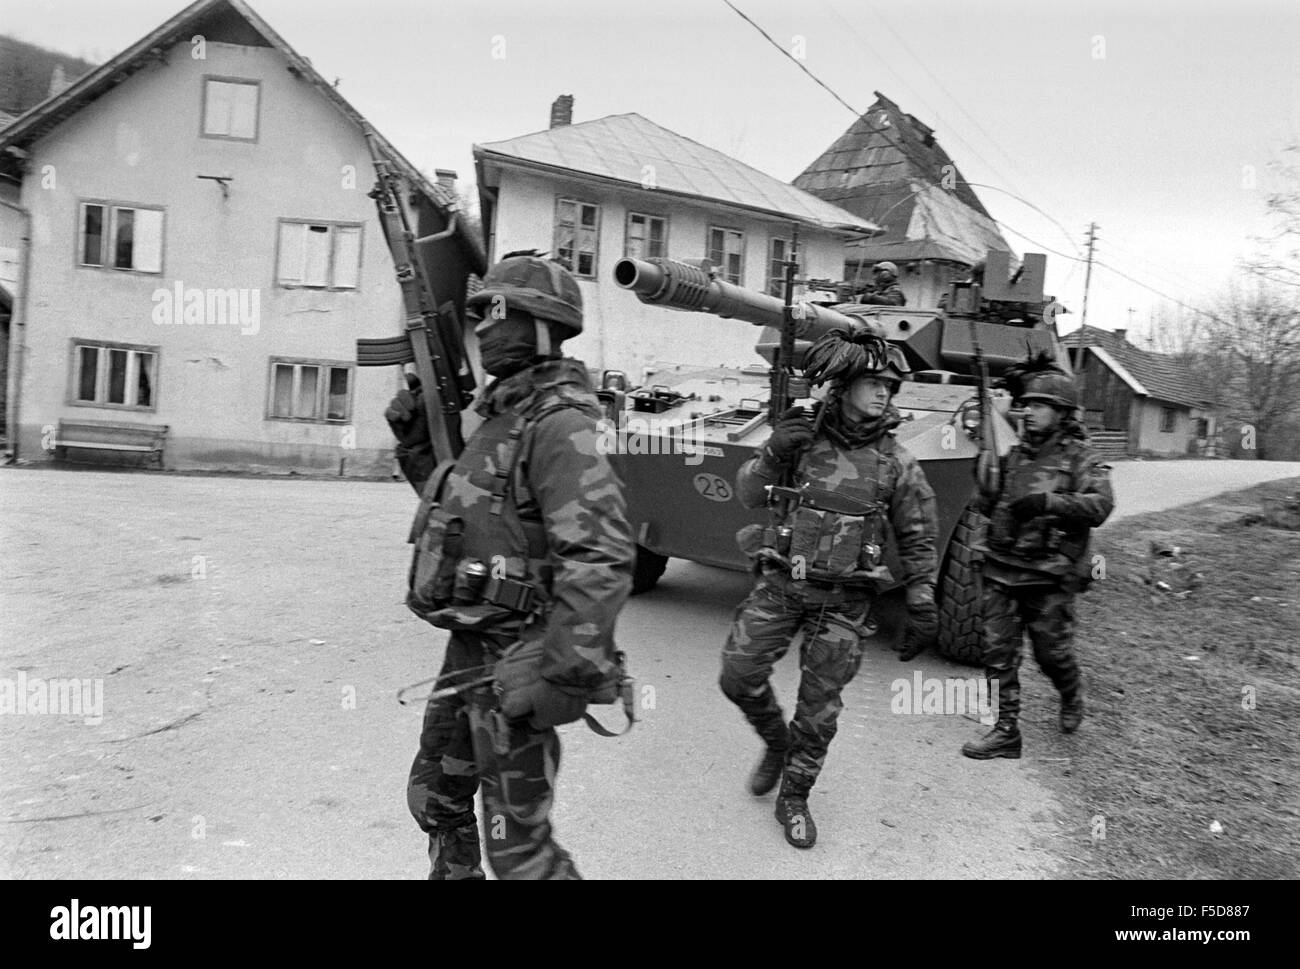 NATO intervention in Bosnia-Herzegovina after Dayton Accords, Italian Army soldiers, patrolling road near Sarajevo, January 1996 Stock Photo